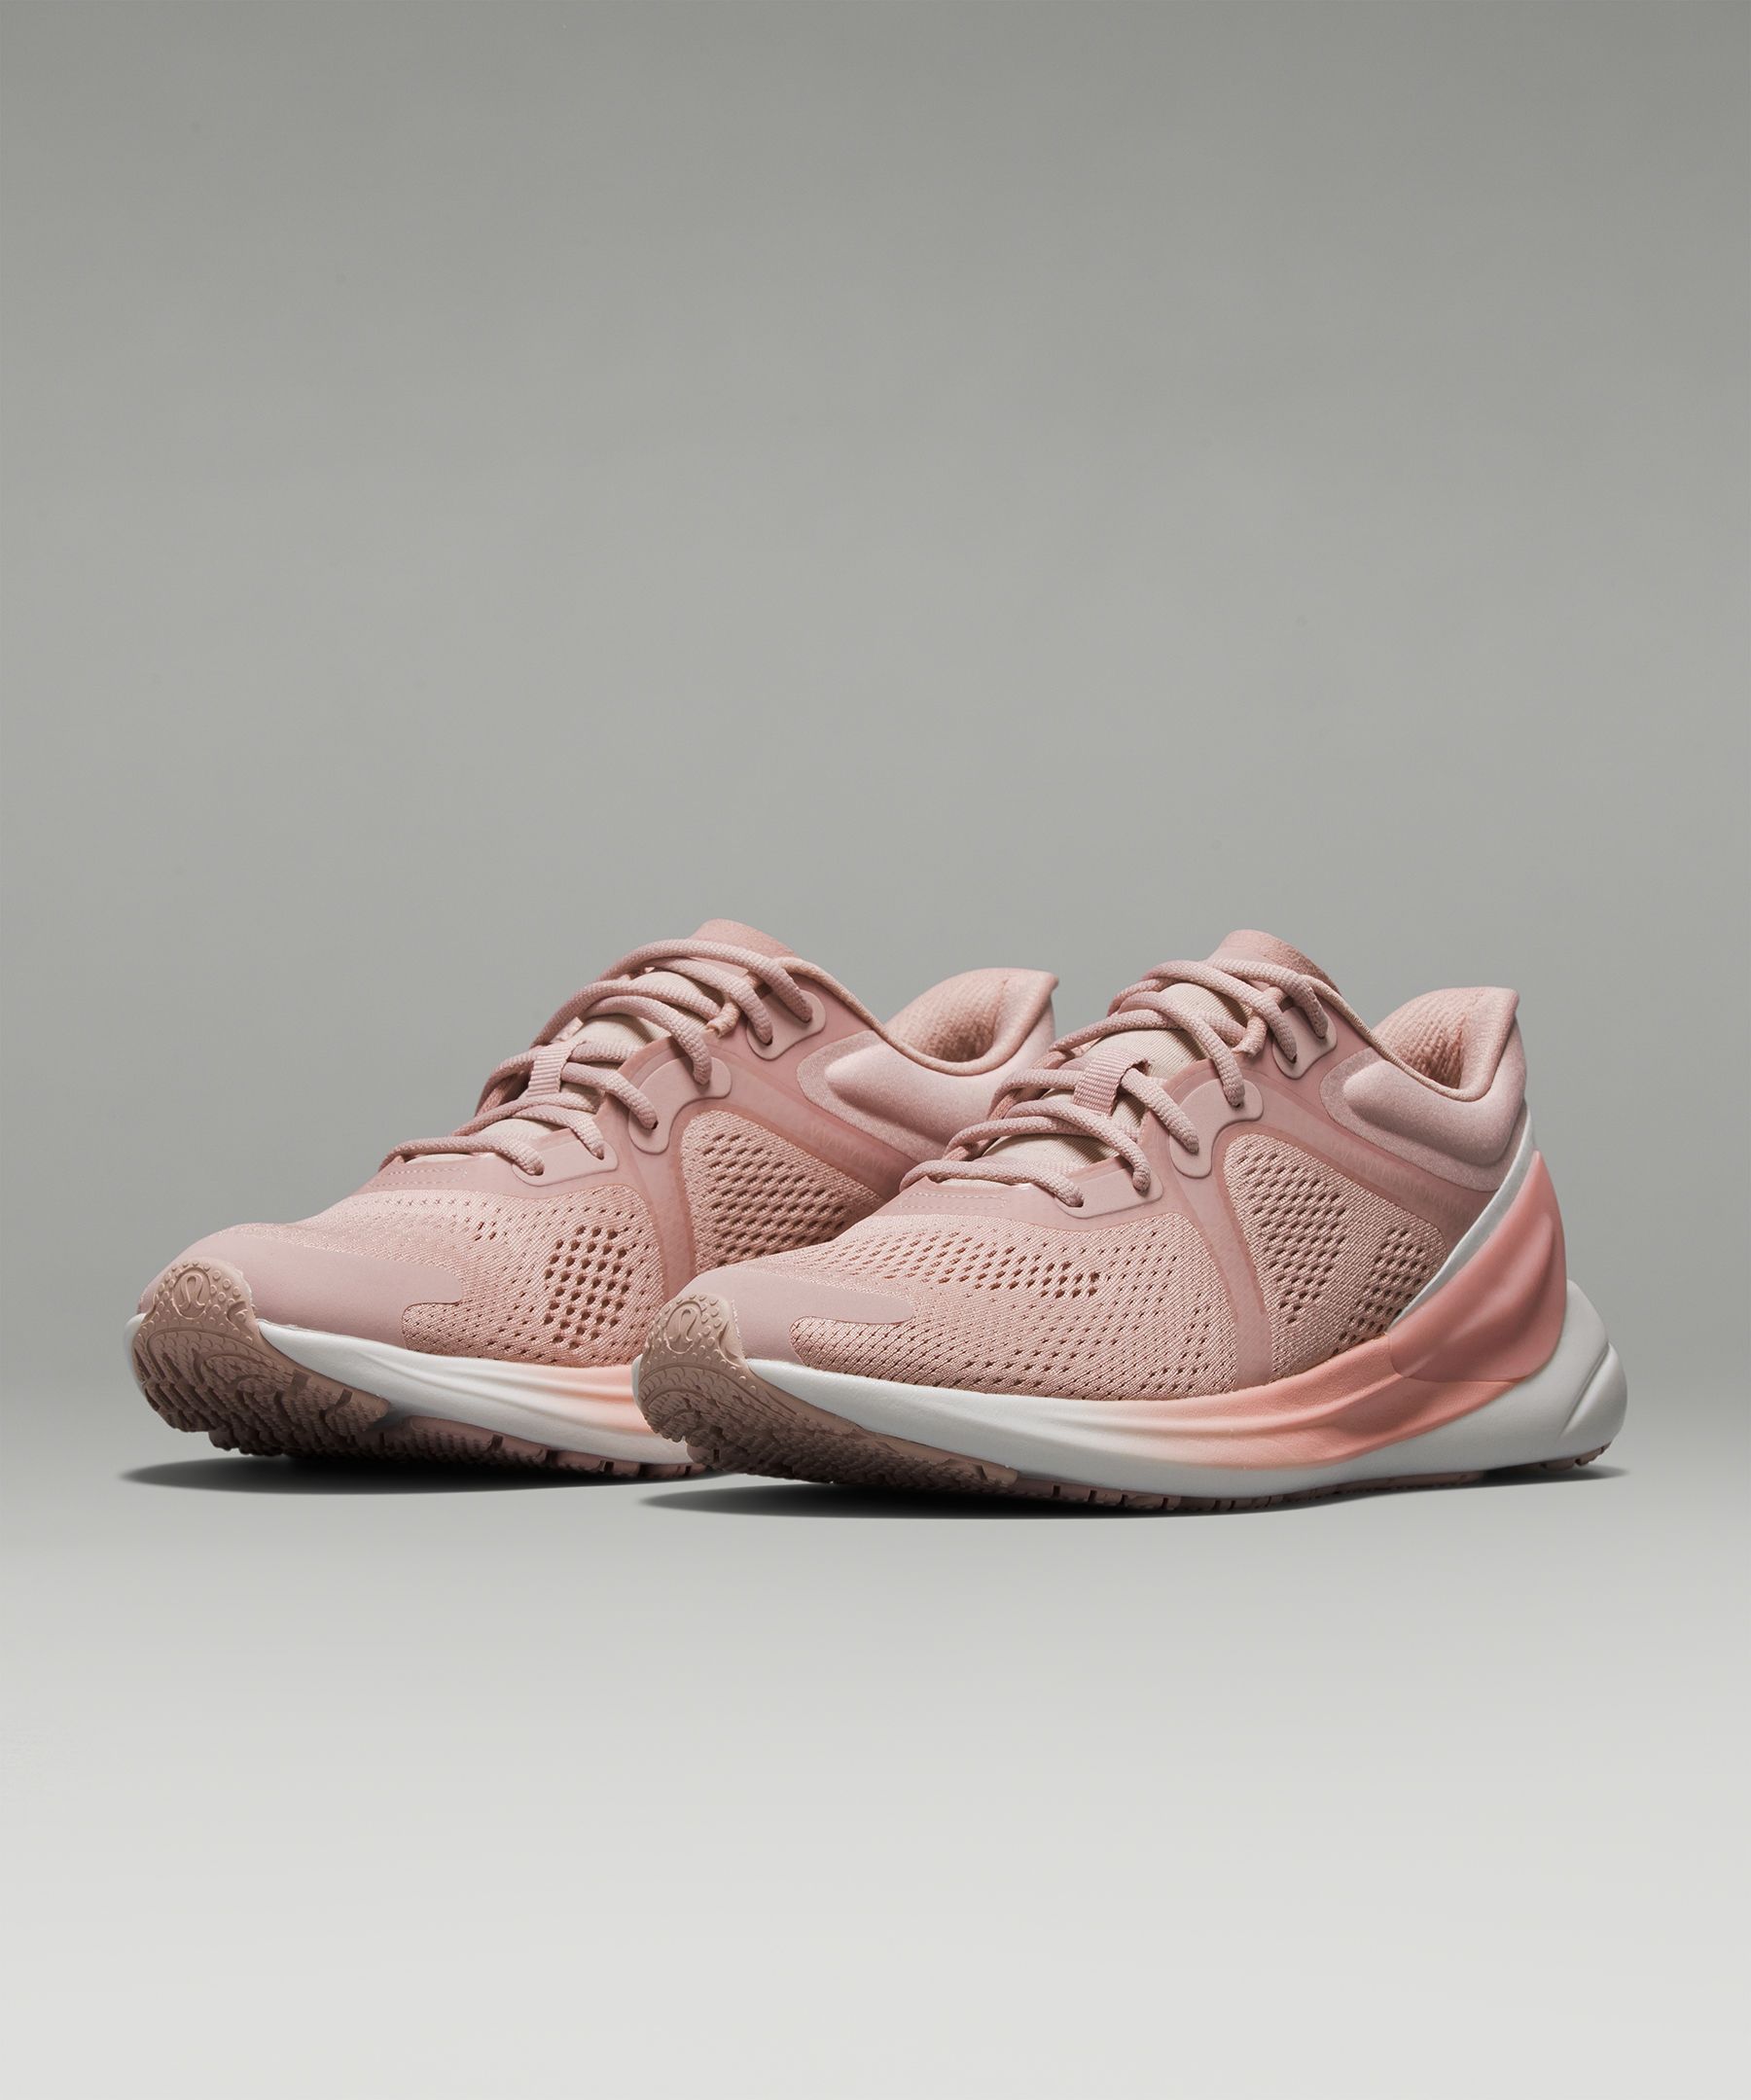 Lululemon Blissfeel Women's Running Shoes In Mink Berry/pink Parfait/light Vapor